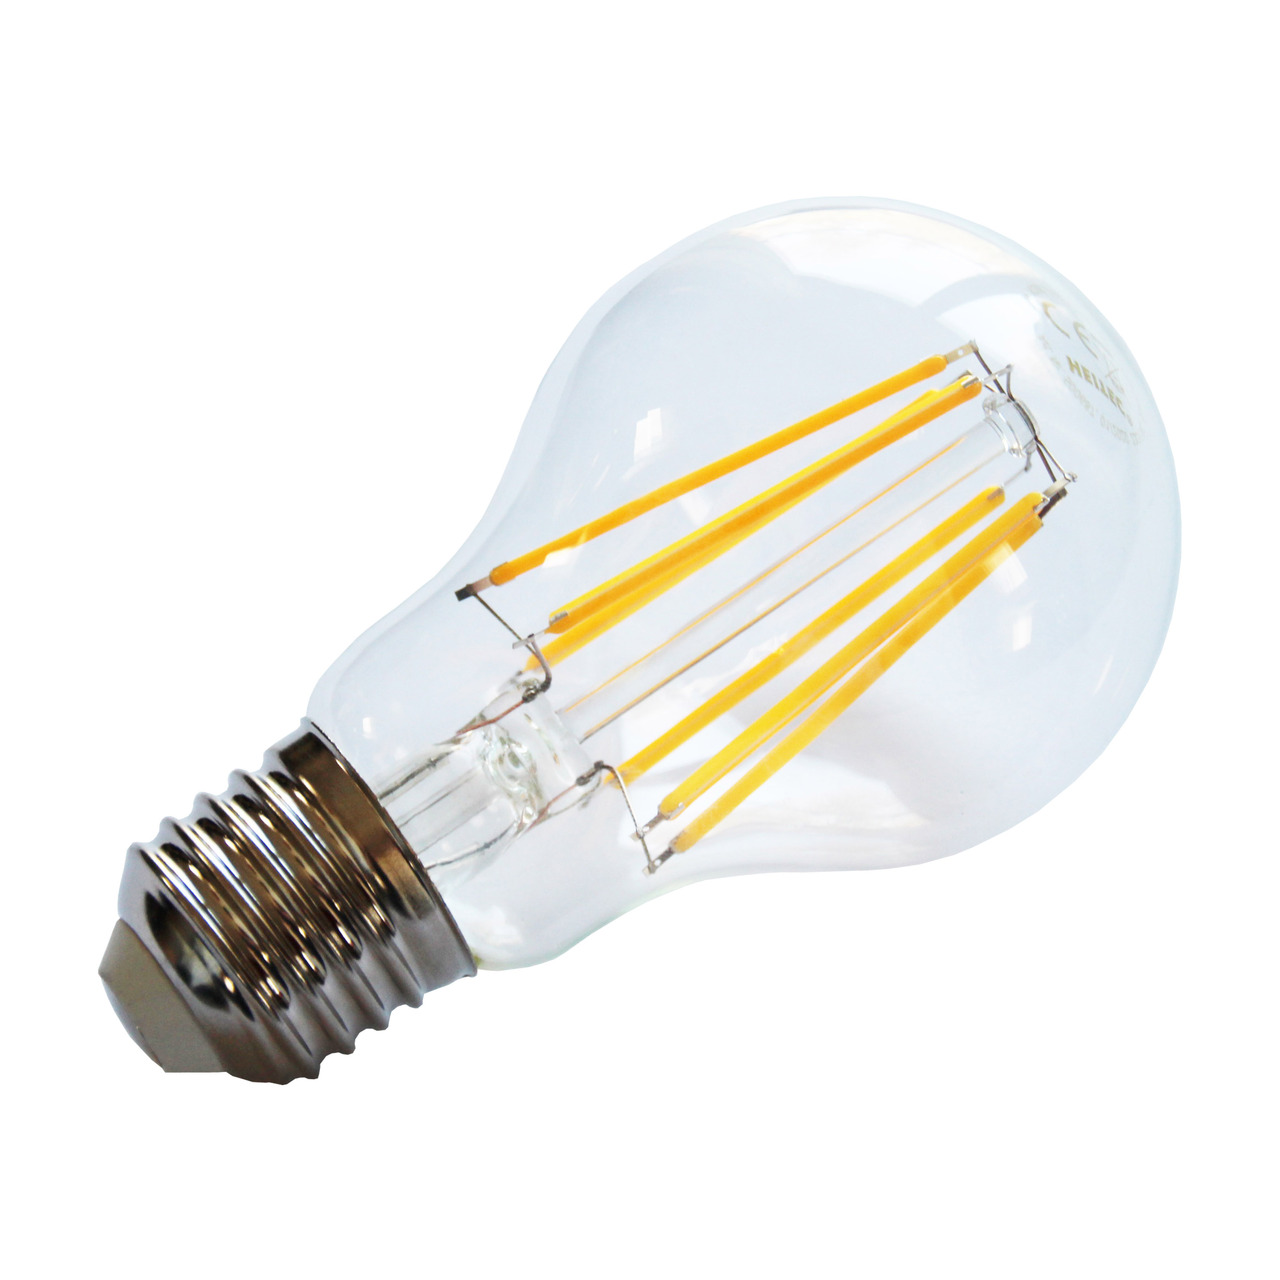 HEITEC 12-W-Filament-LED-Lampe A60- E27- 1050 lm- warmweiss- klar unter Beleuchtung